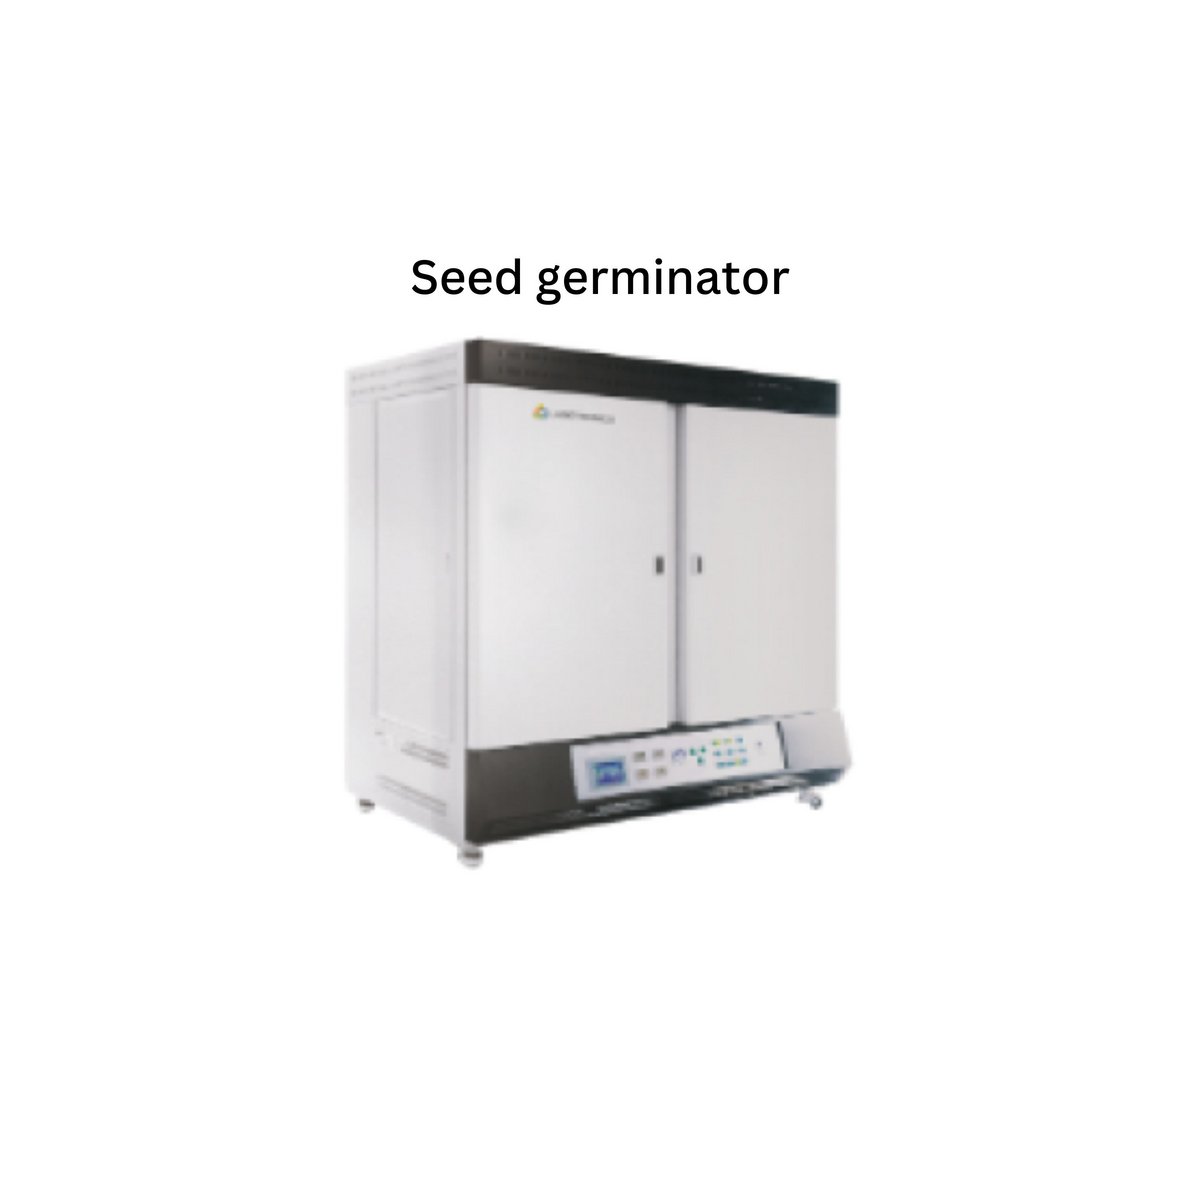 Seed germinator.jpg